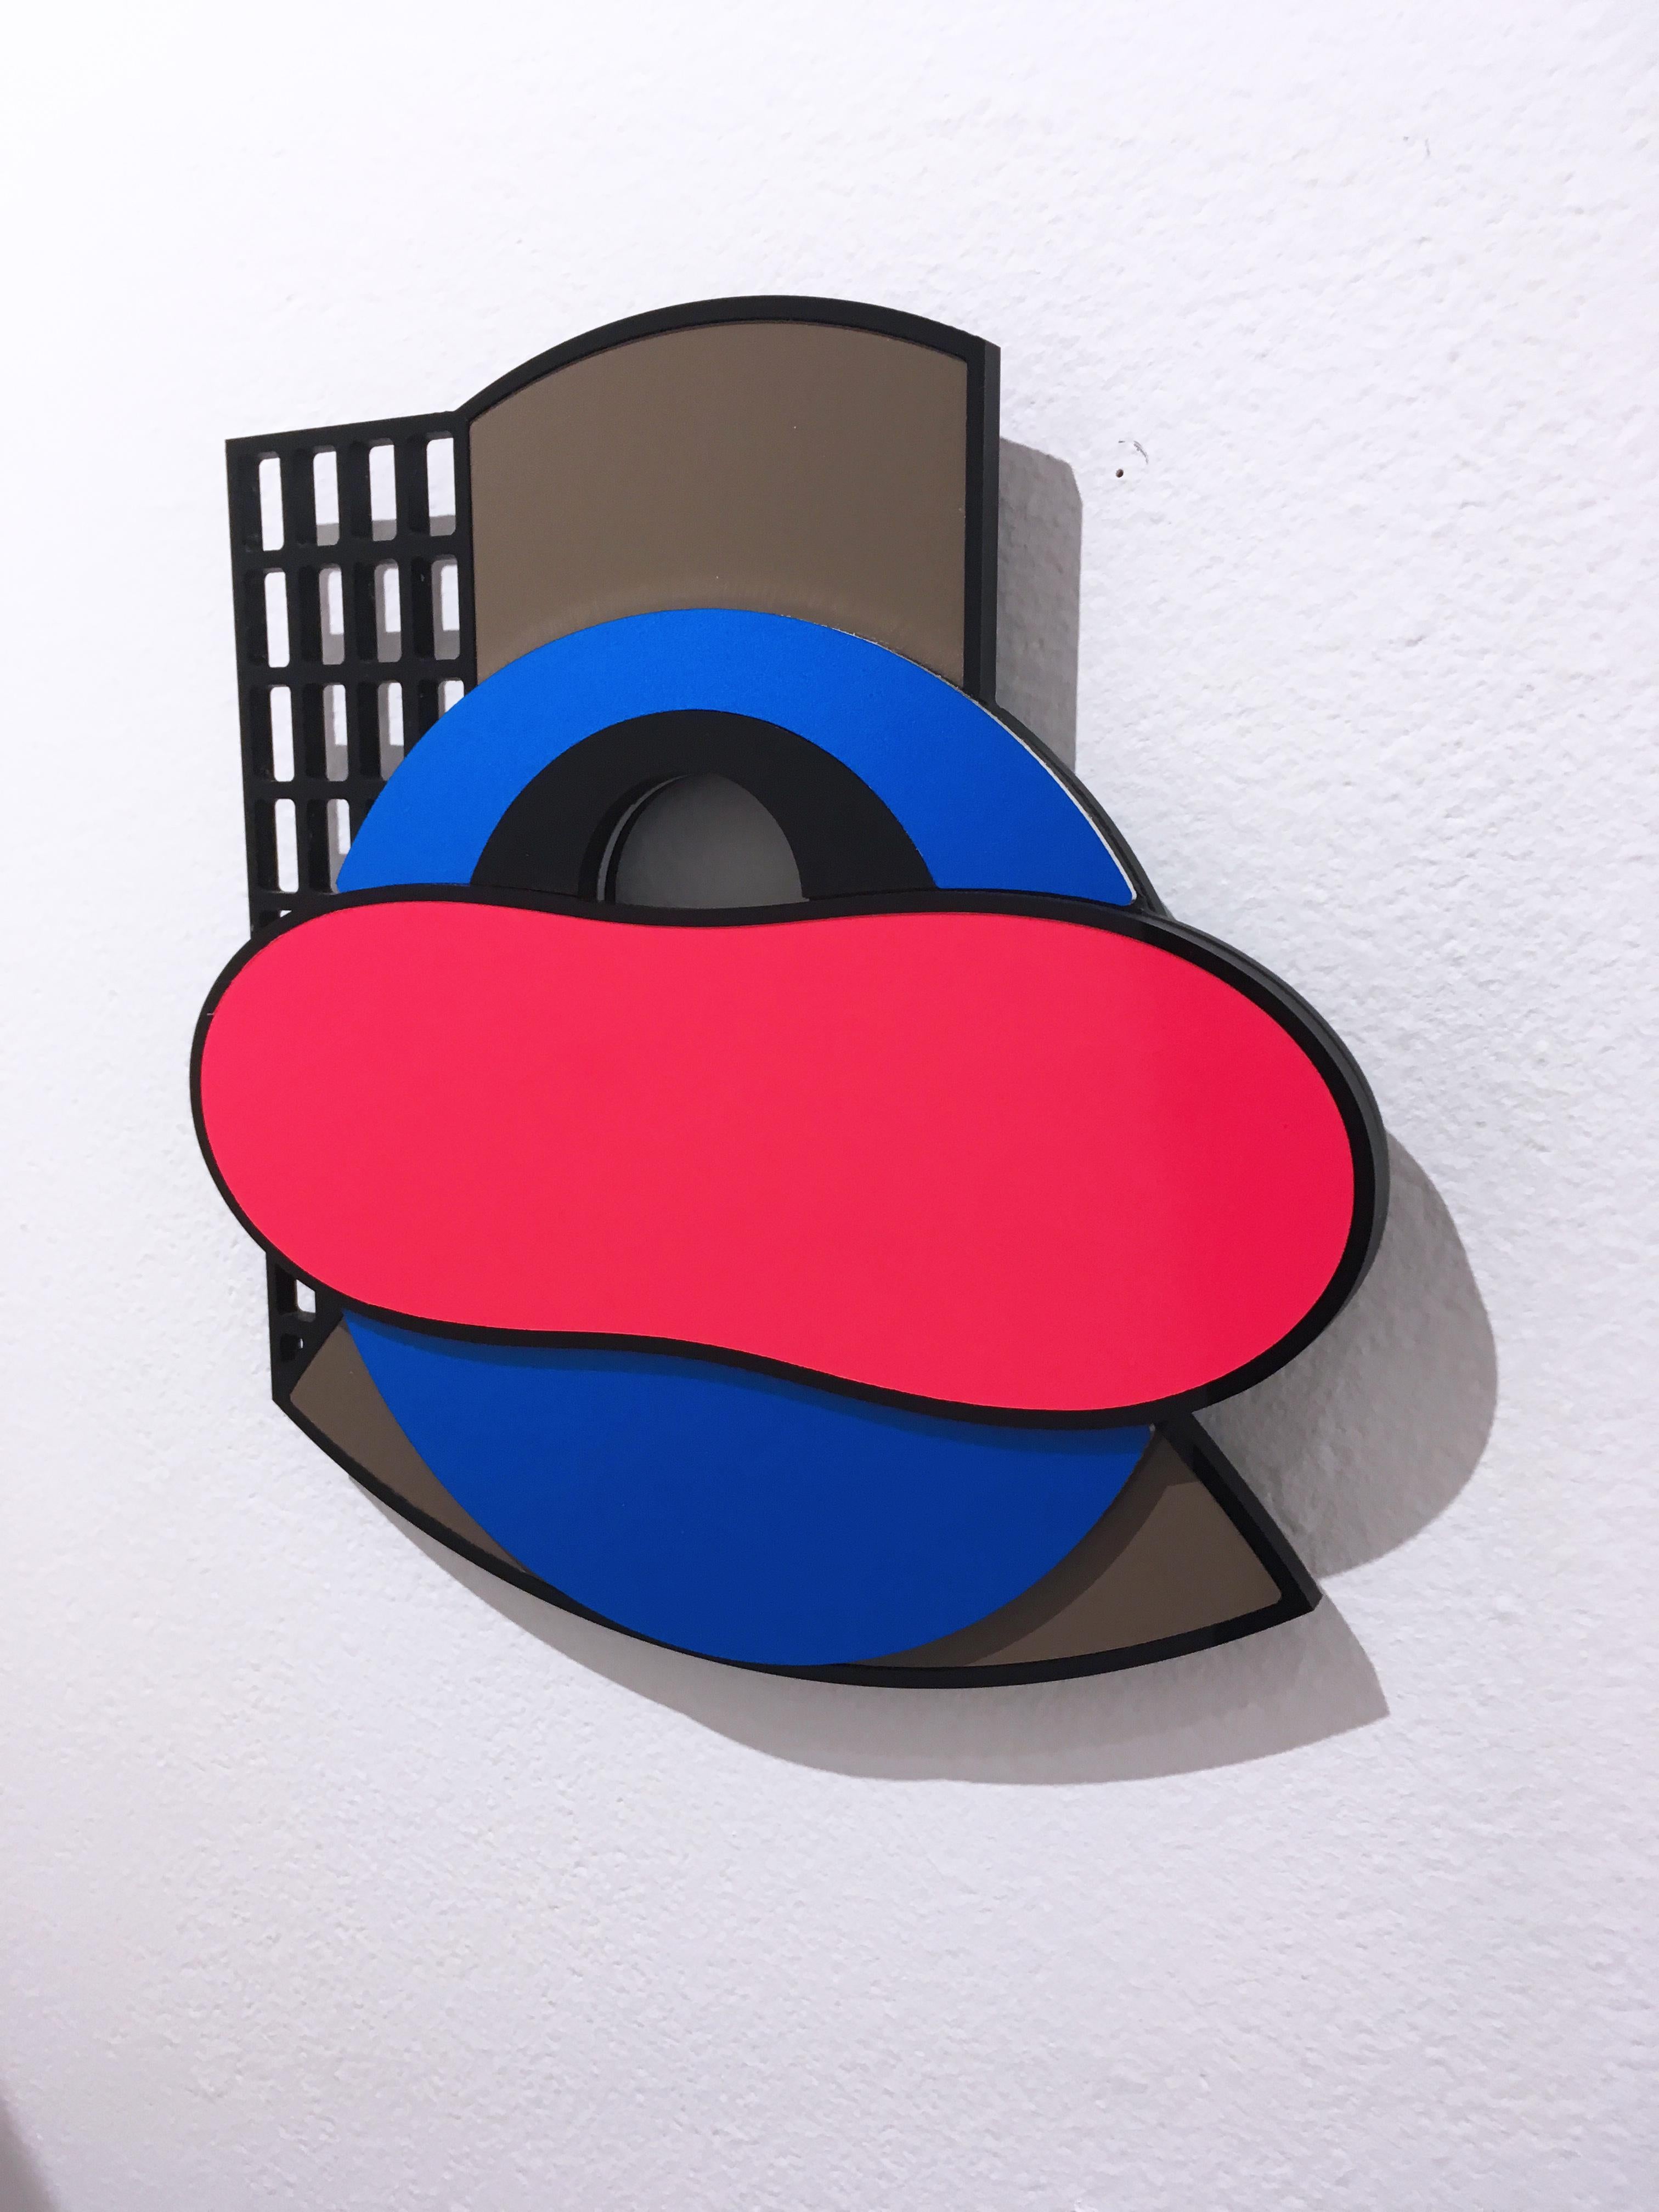 Ebena, acrylic, aluminum, vinyl, wall sculpture, abstract geometric, pink, blue - Sculpture by Joshua Edward Bennett